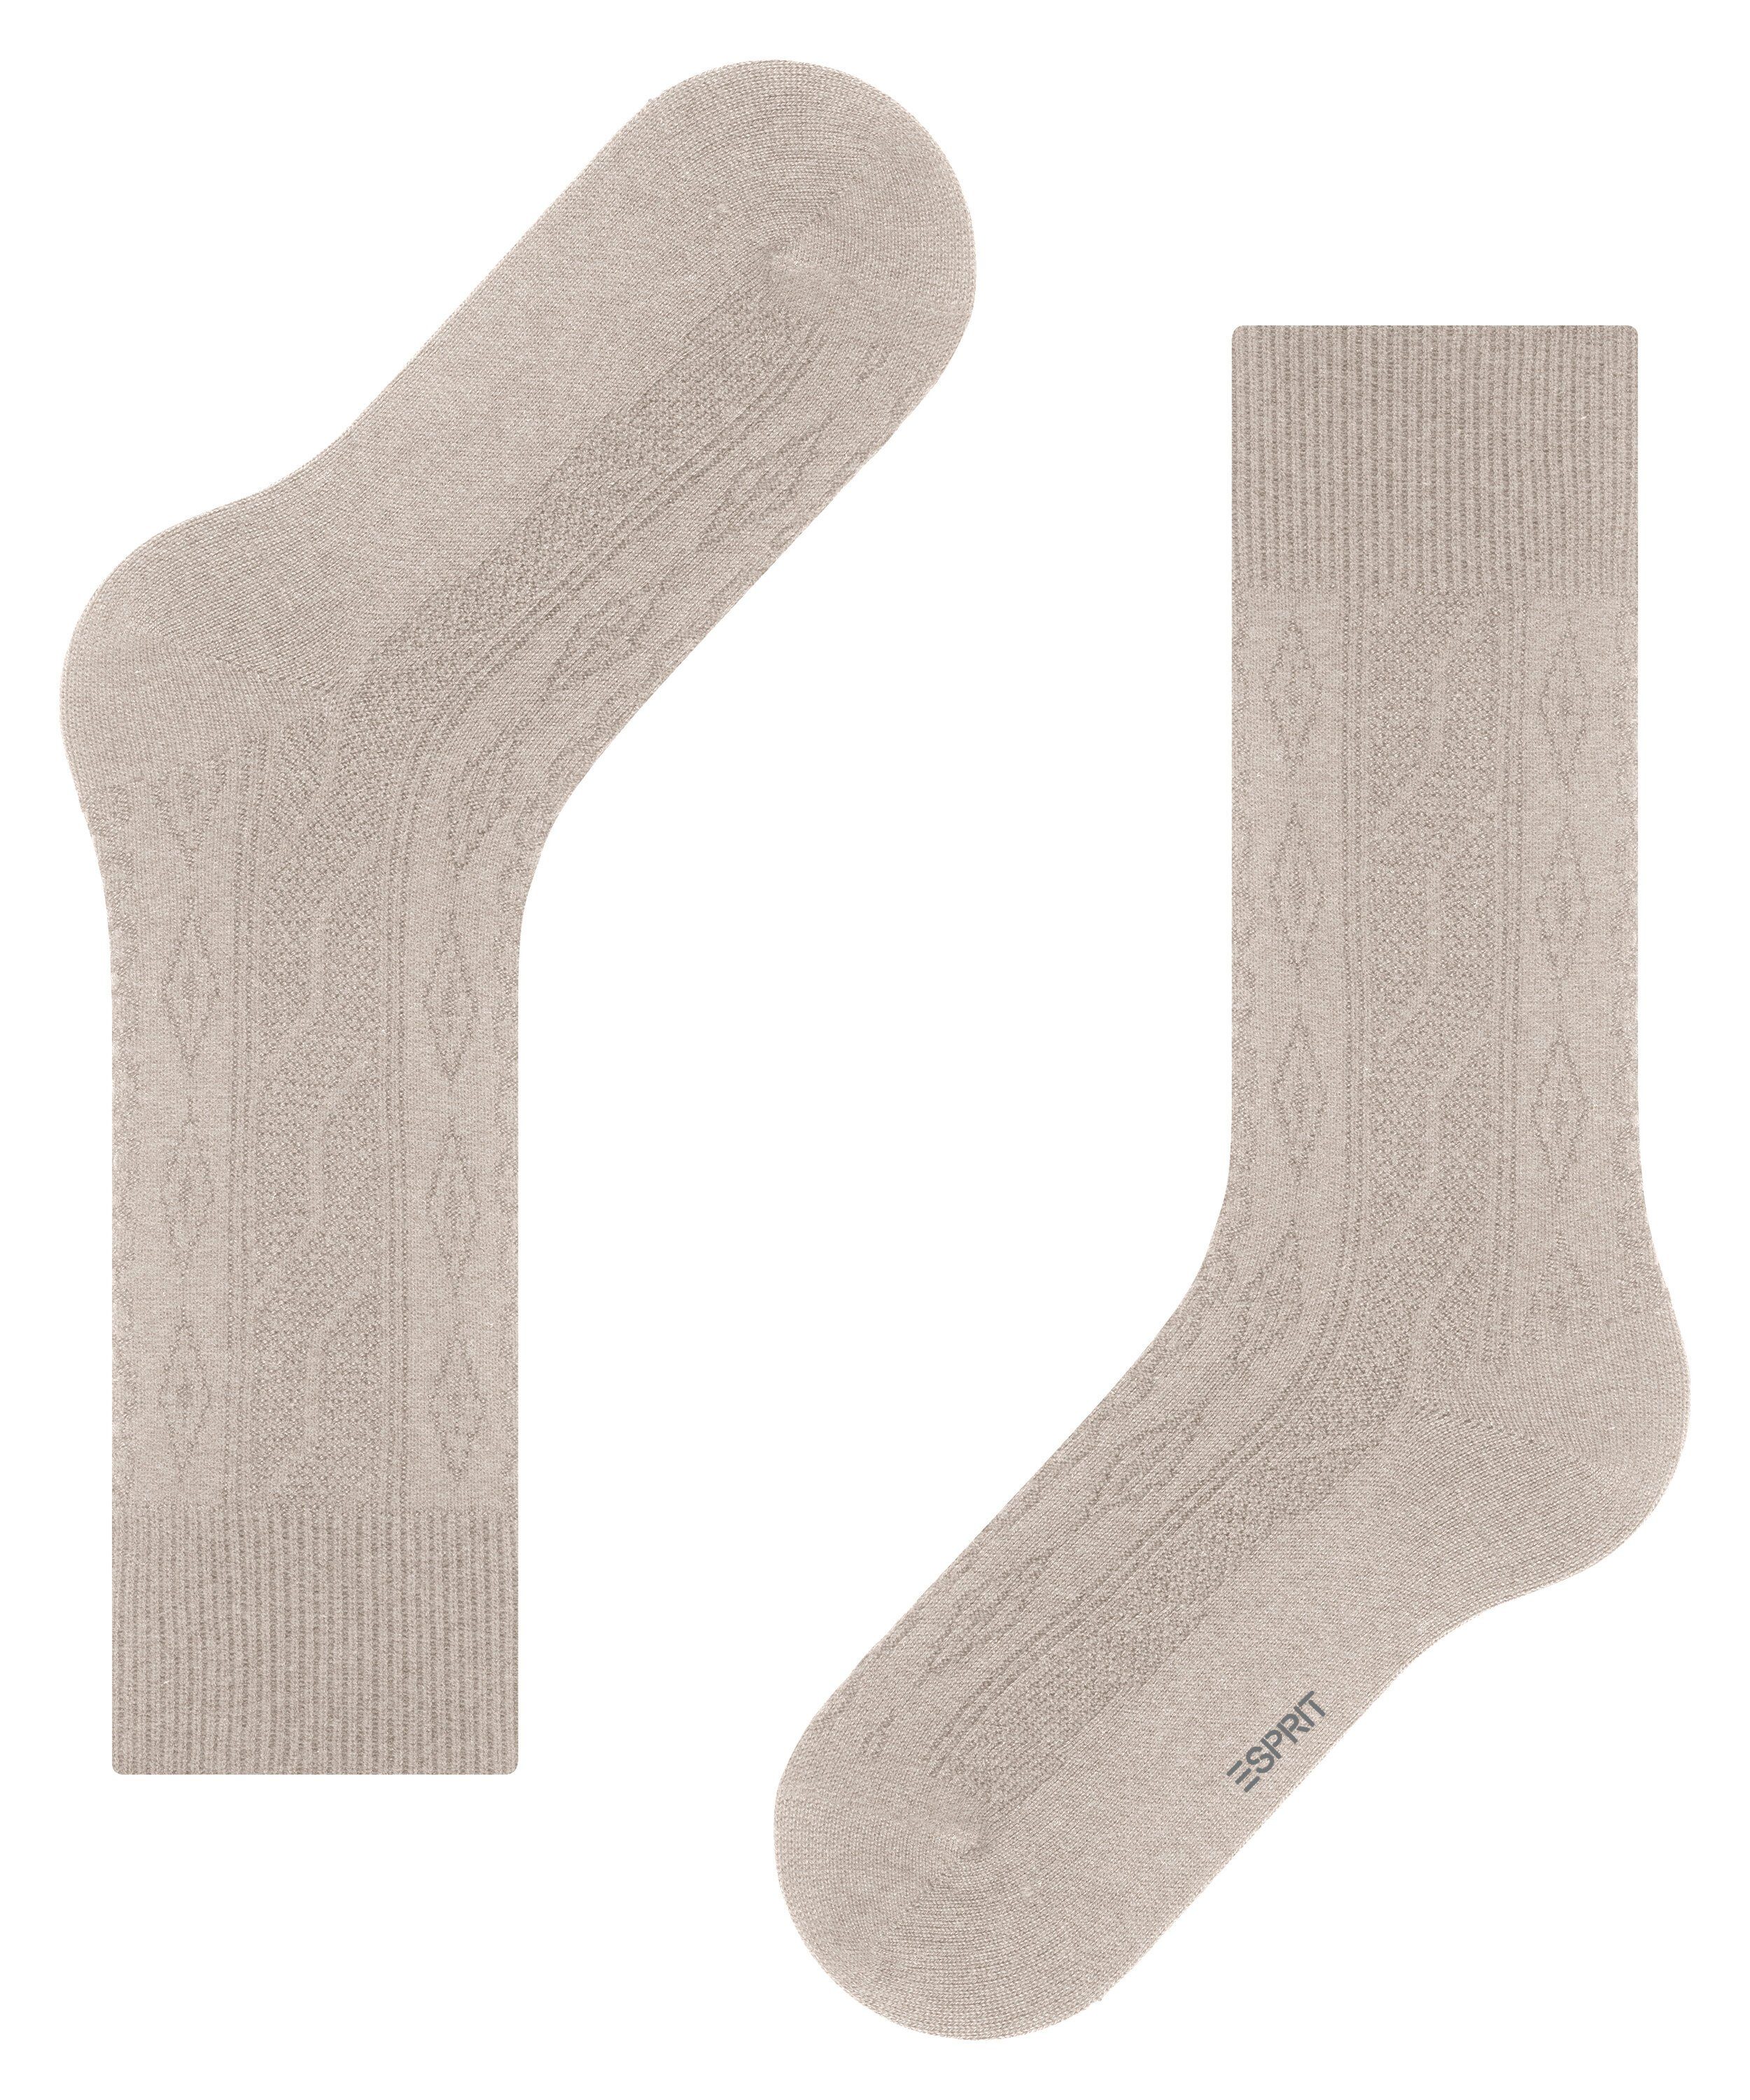 mel. Stich beige Esprit Boot Cable (1-Paar) Socken (4068)